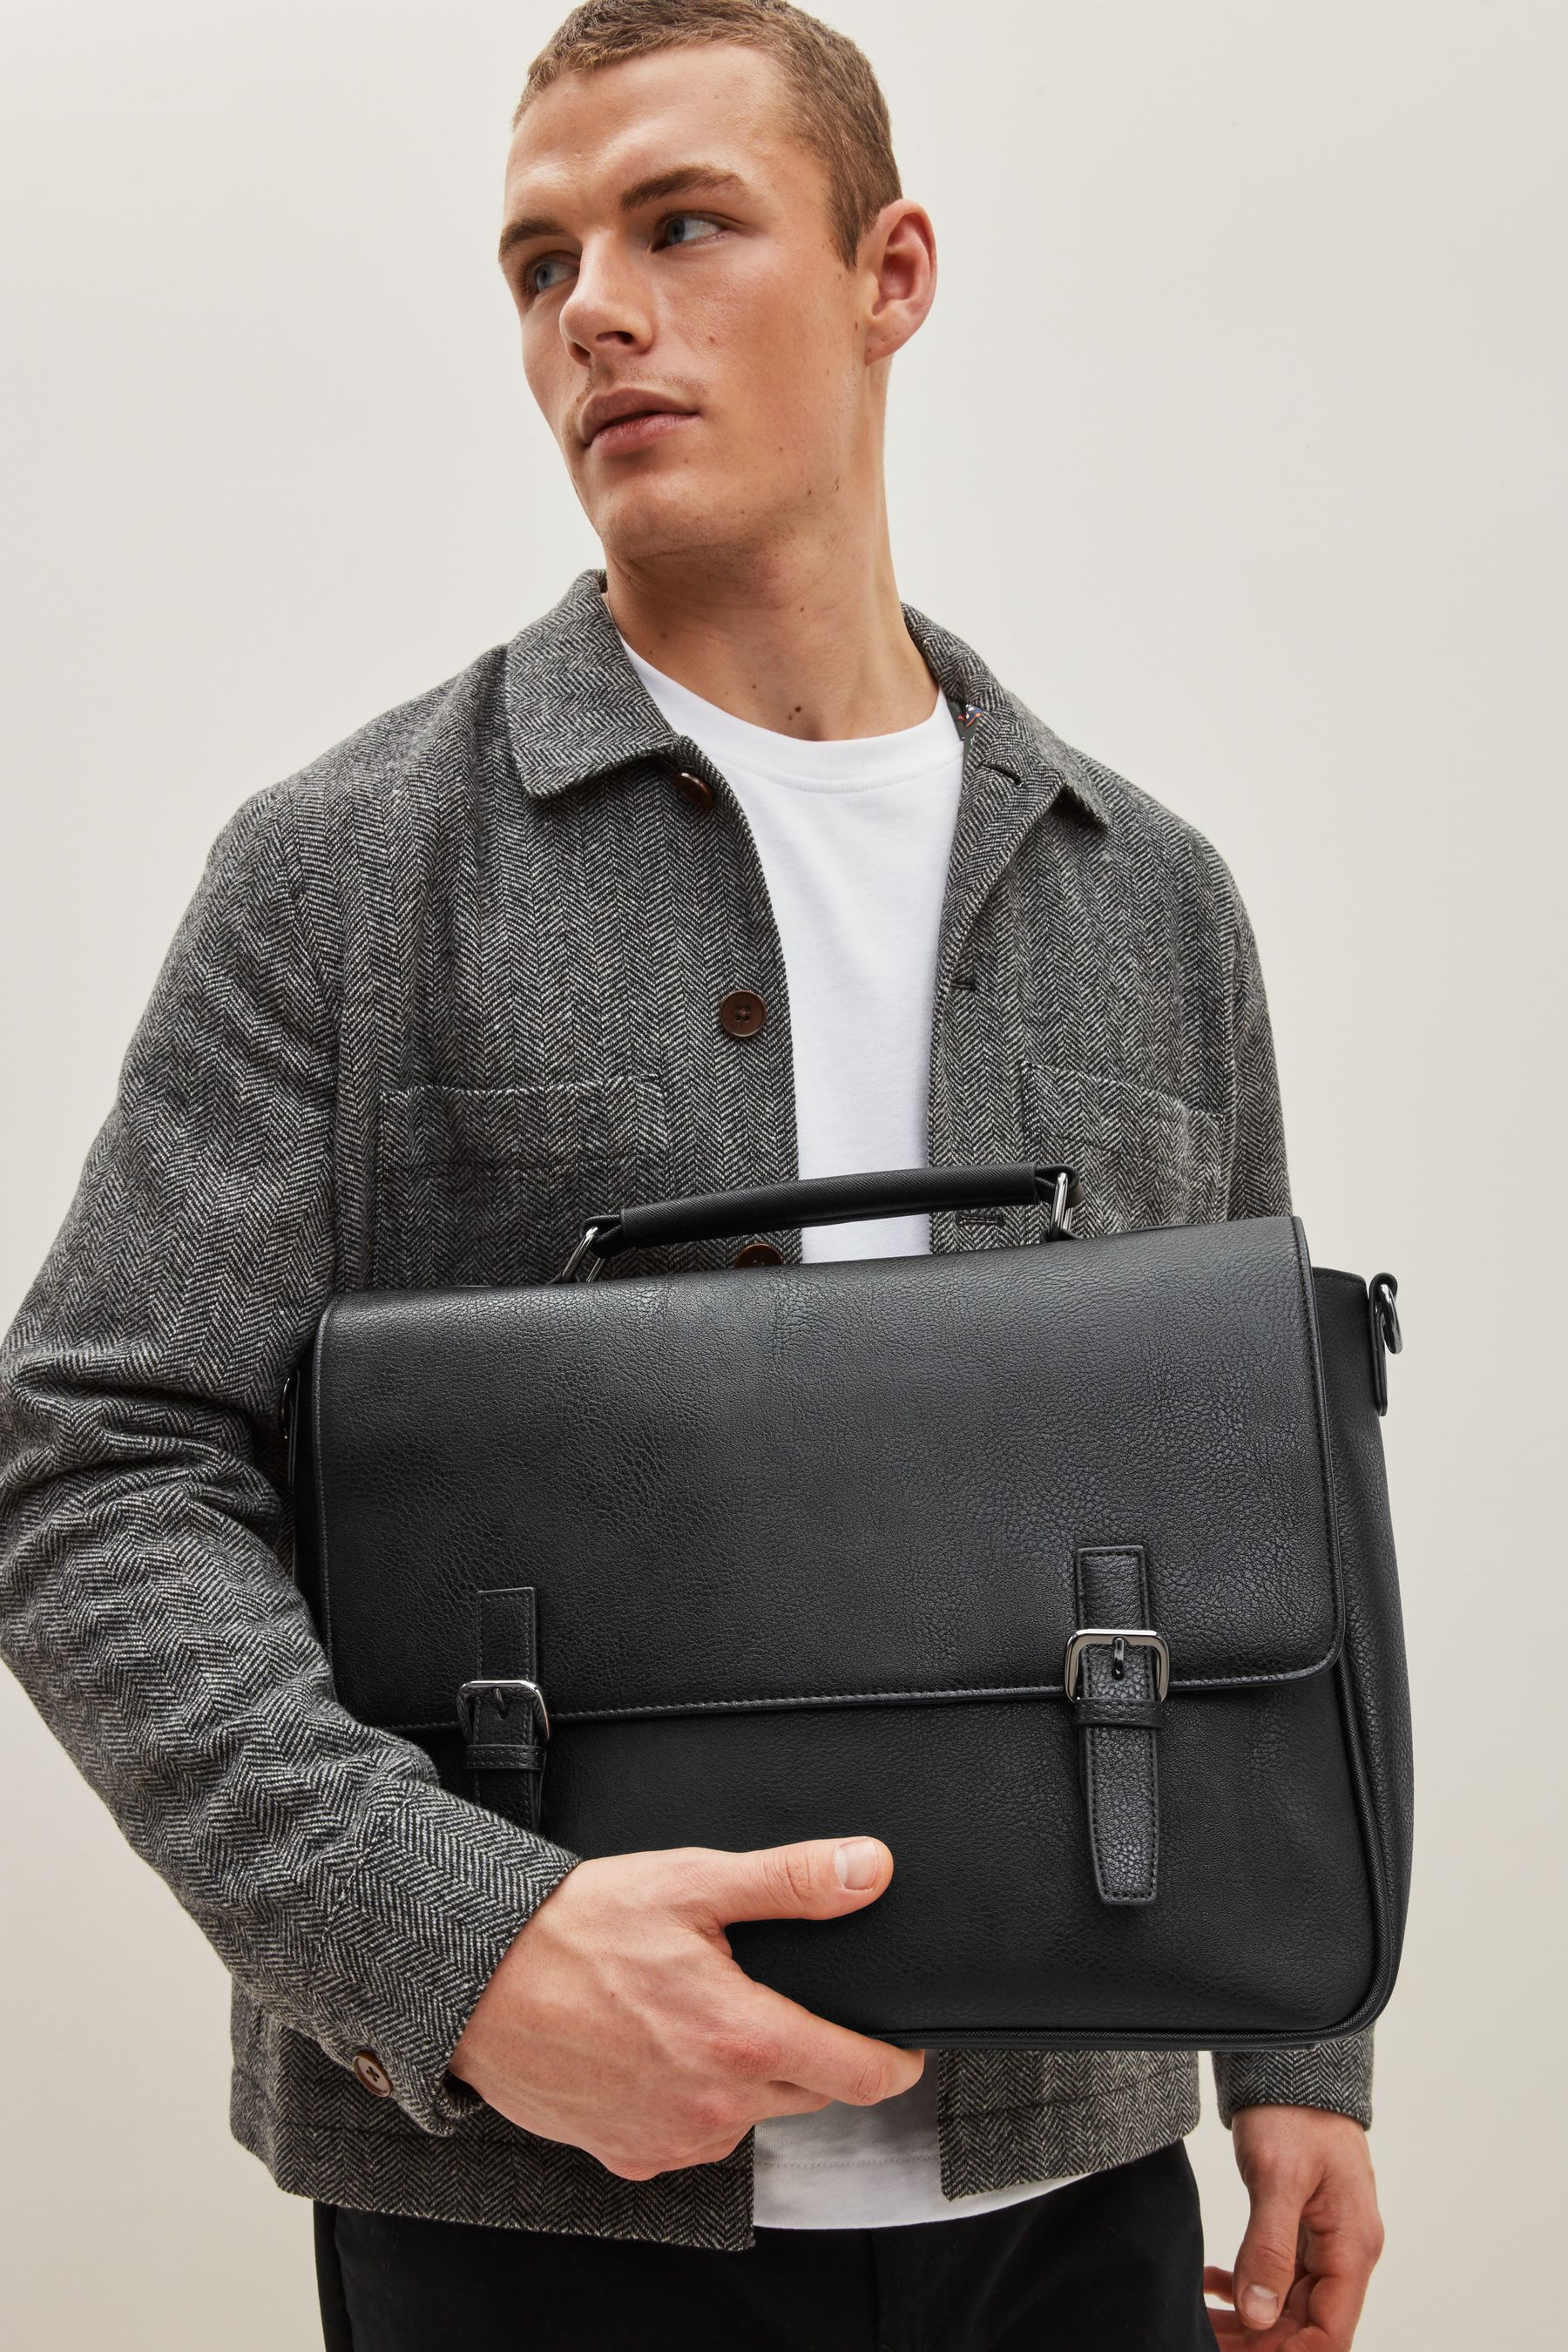 Buy Black Briefcase Messenger from the Next UK online shop